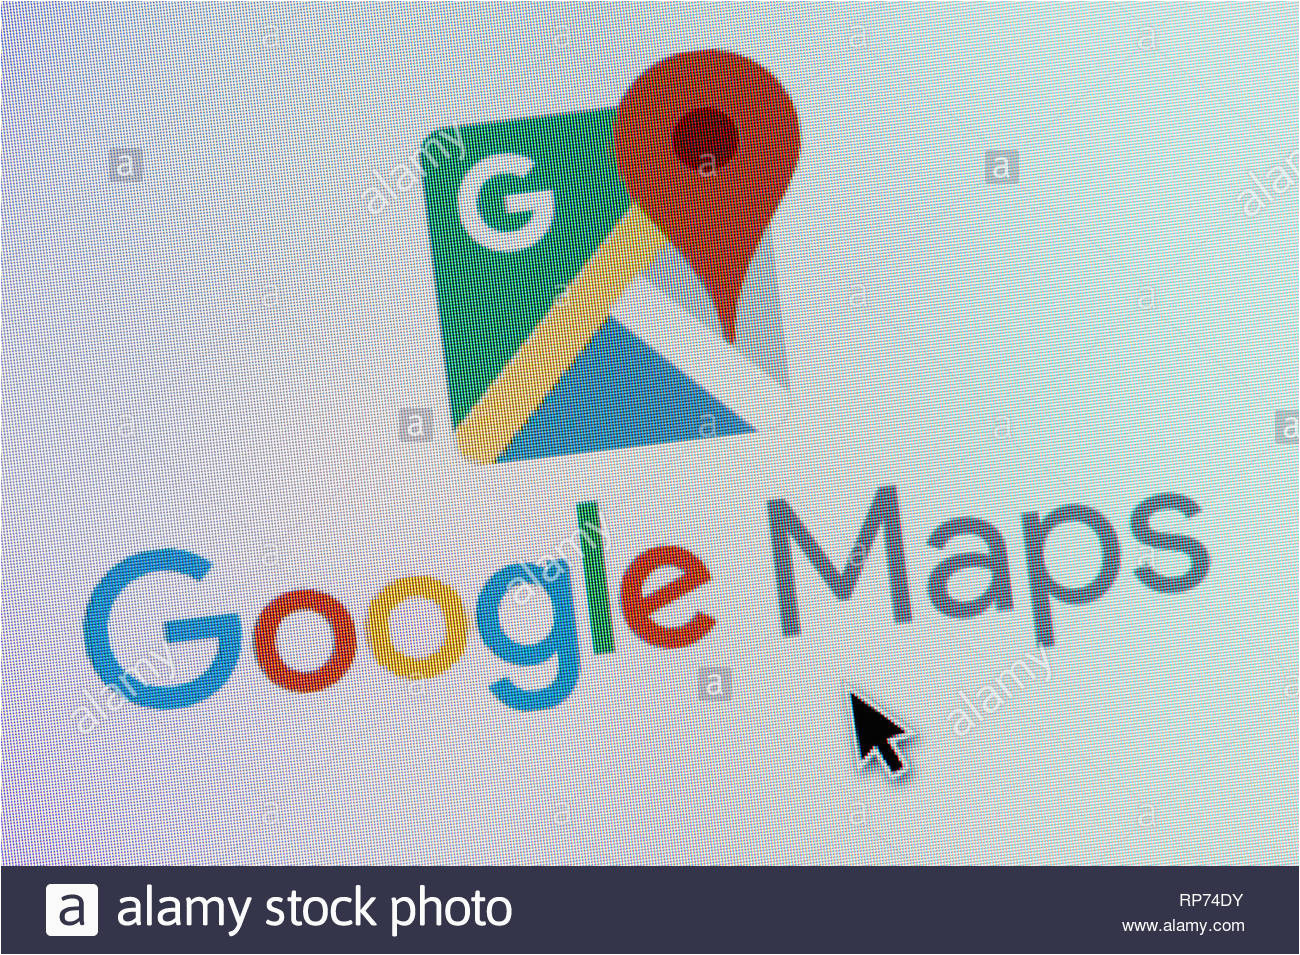 google maps stockfotos google maps bilder alamy